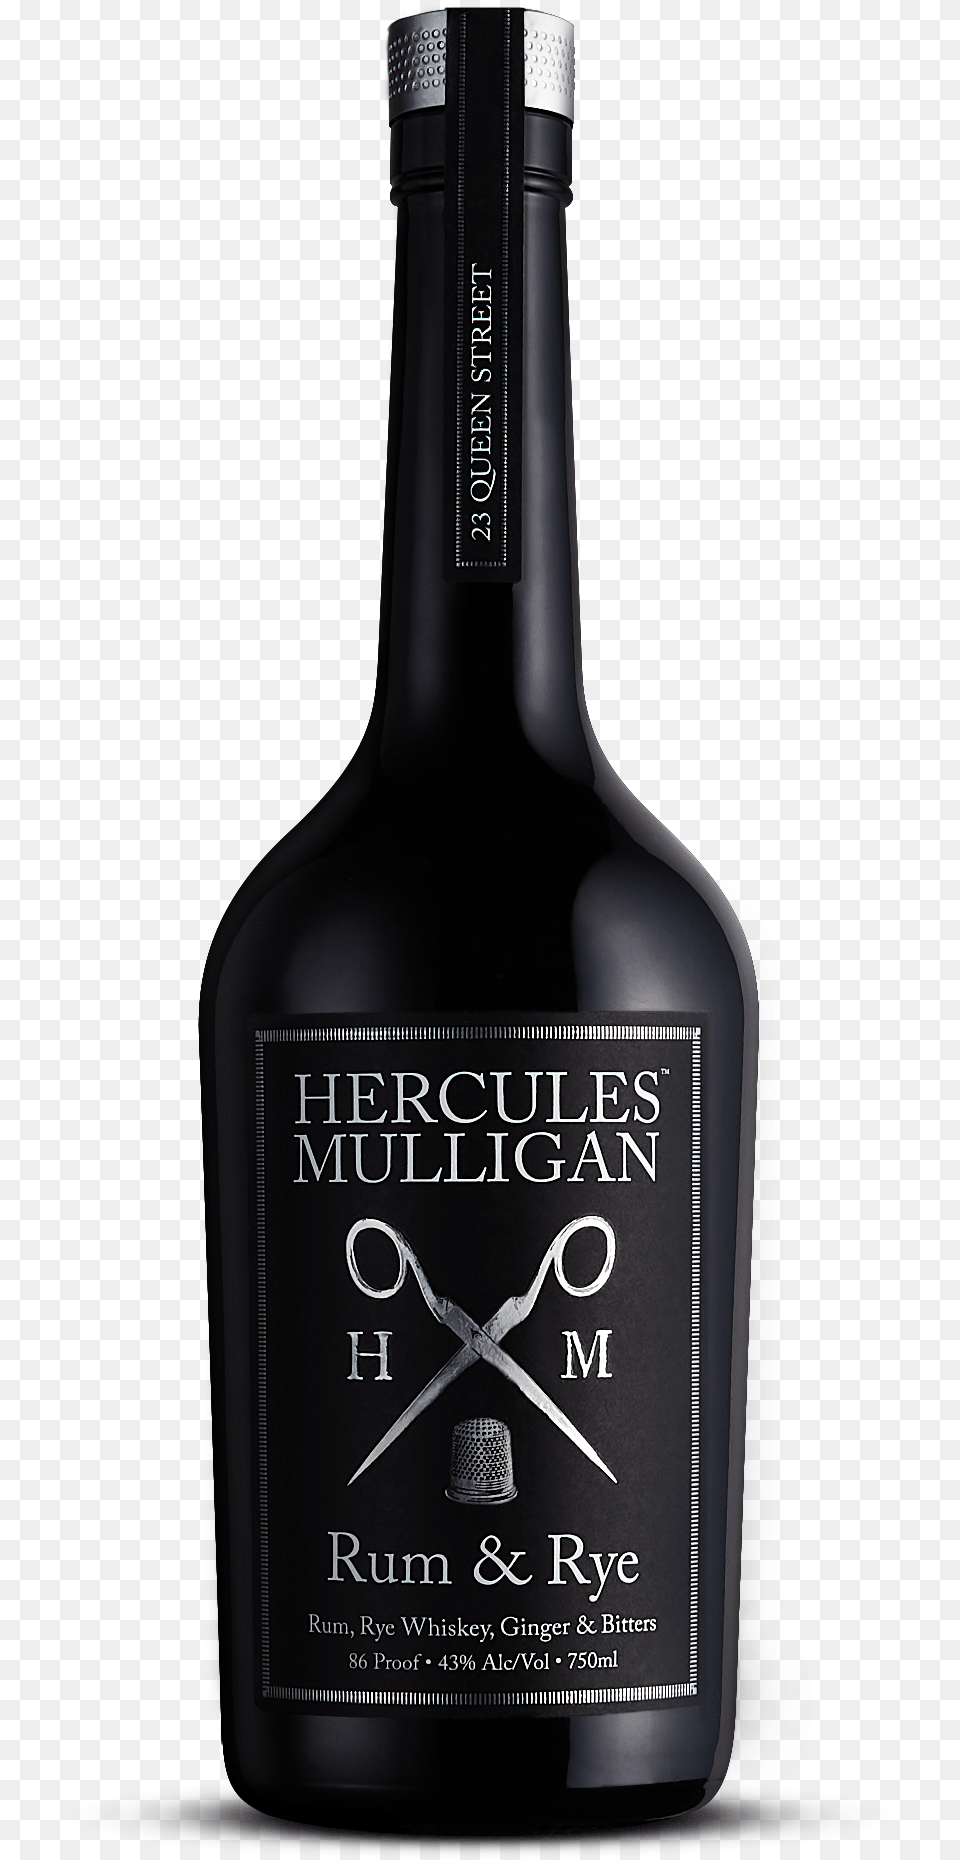 Hercules Mulligan Rum Amp Rye, Alcohol, Beverage, Liquor, Bottle Png Image